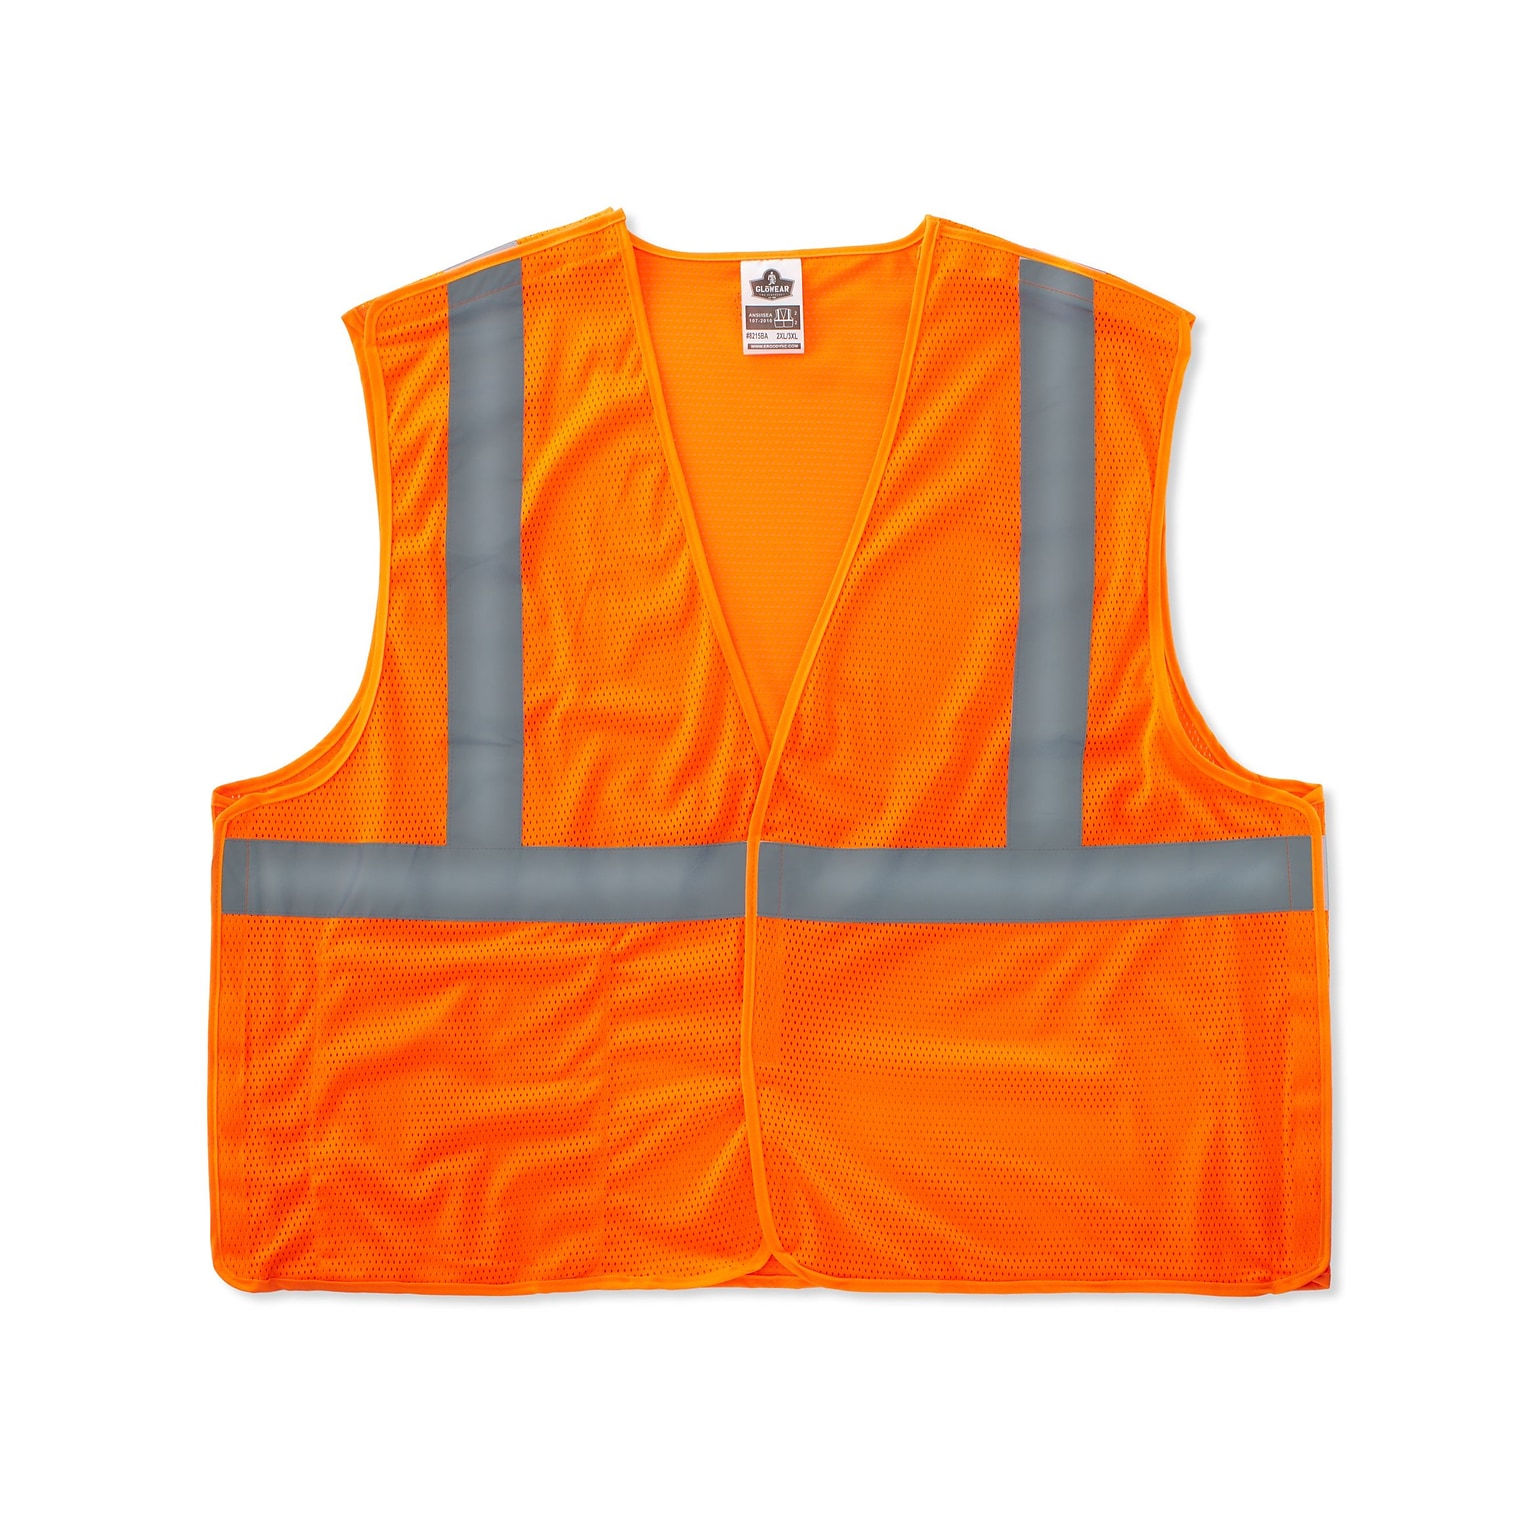 Ergodyne GloWear 8215BA High Visibility Sleeveless Safety Vest, ANSI Class R2, Orange, 4XL/5XL (21069)